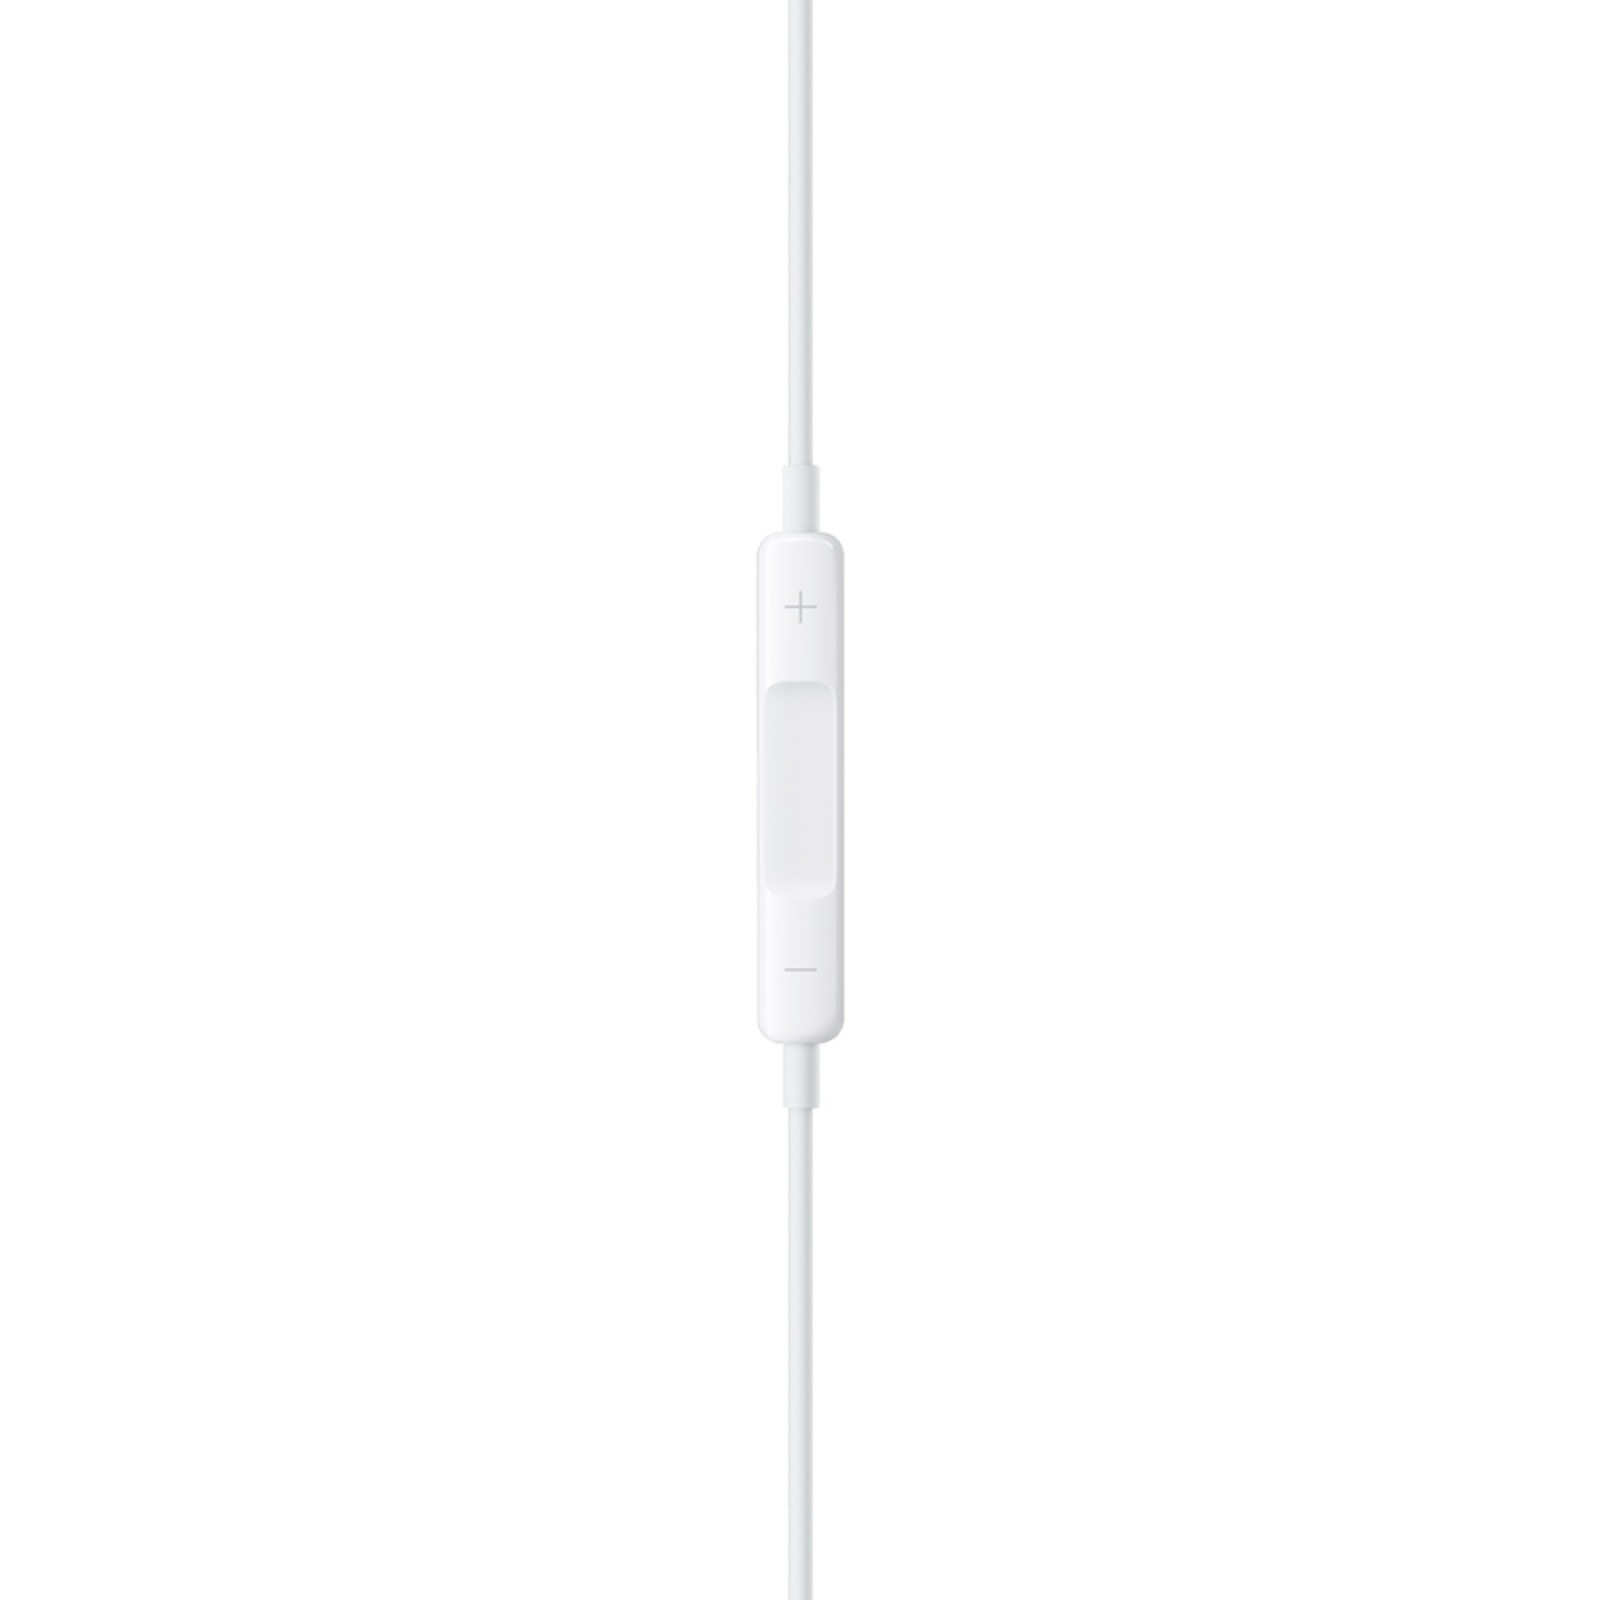 Оригинални слушалки  iPhone Lightning Audio Stereo HF - Бели, MMTN2ZM/A